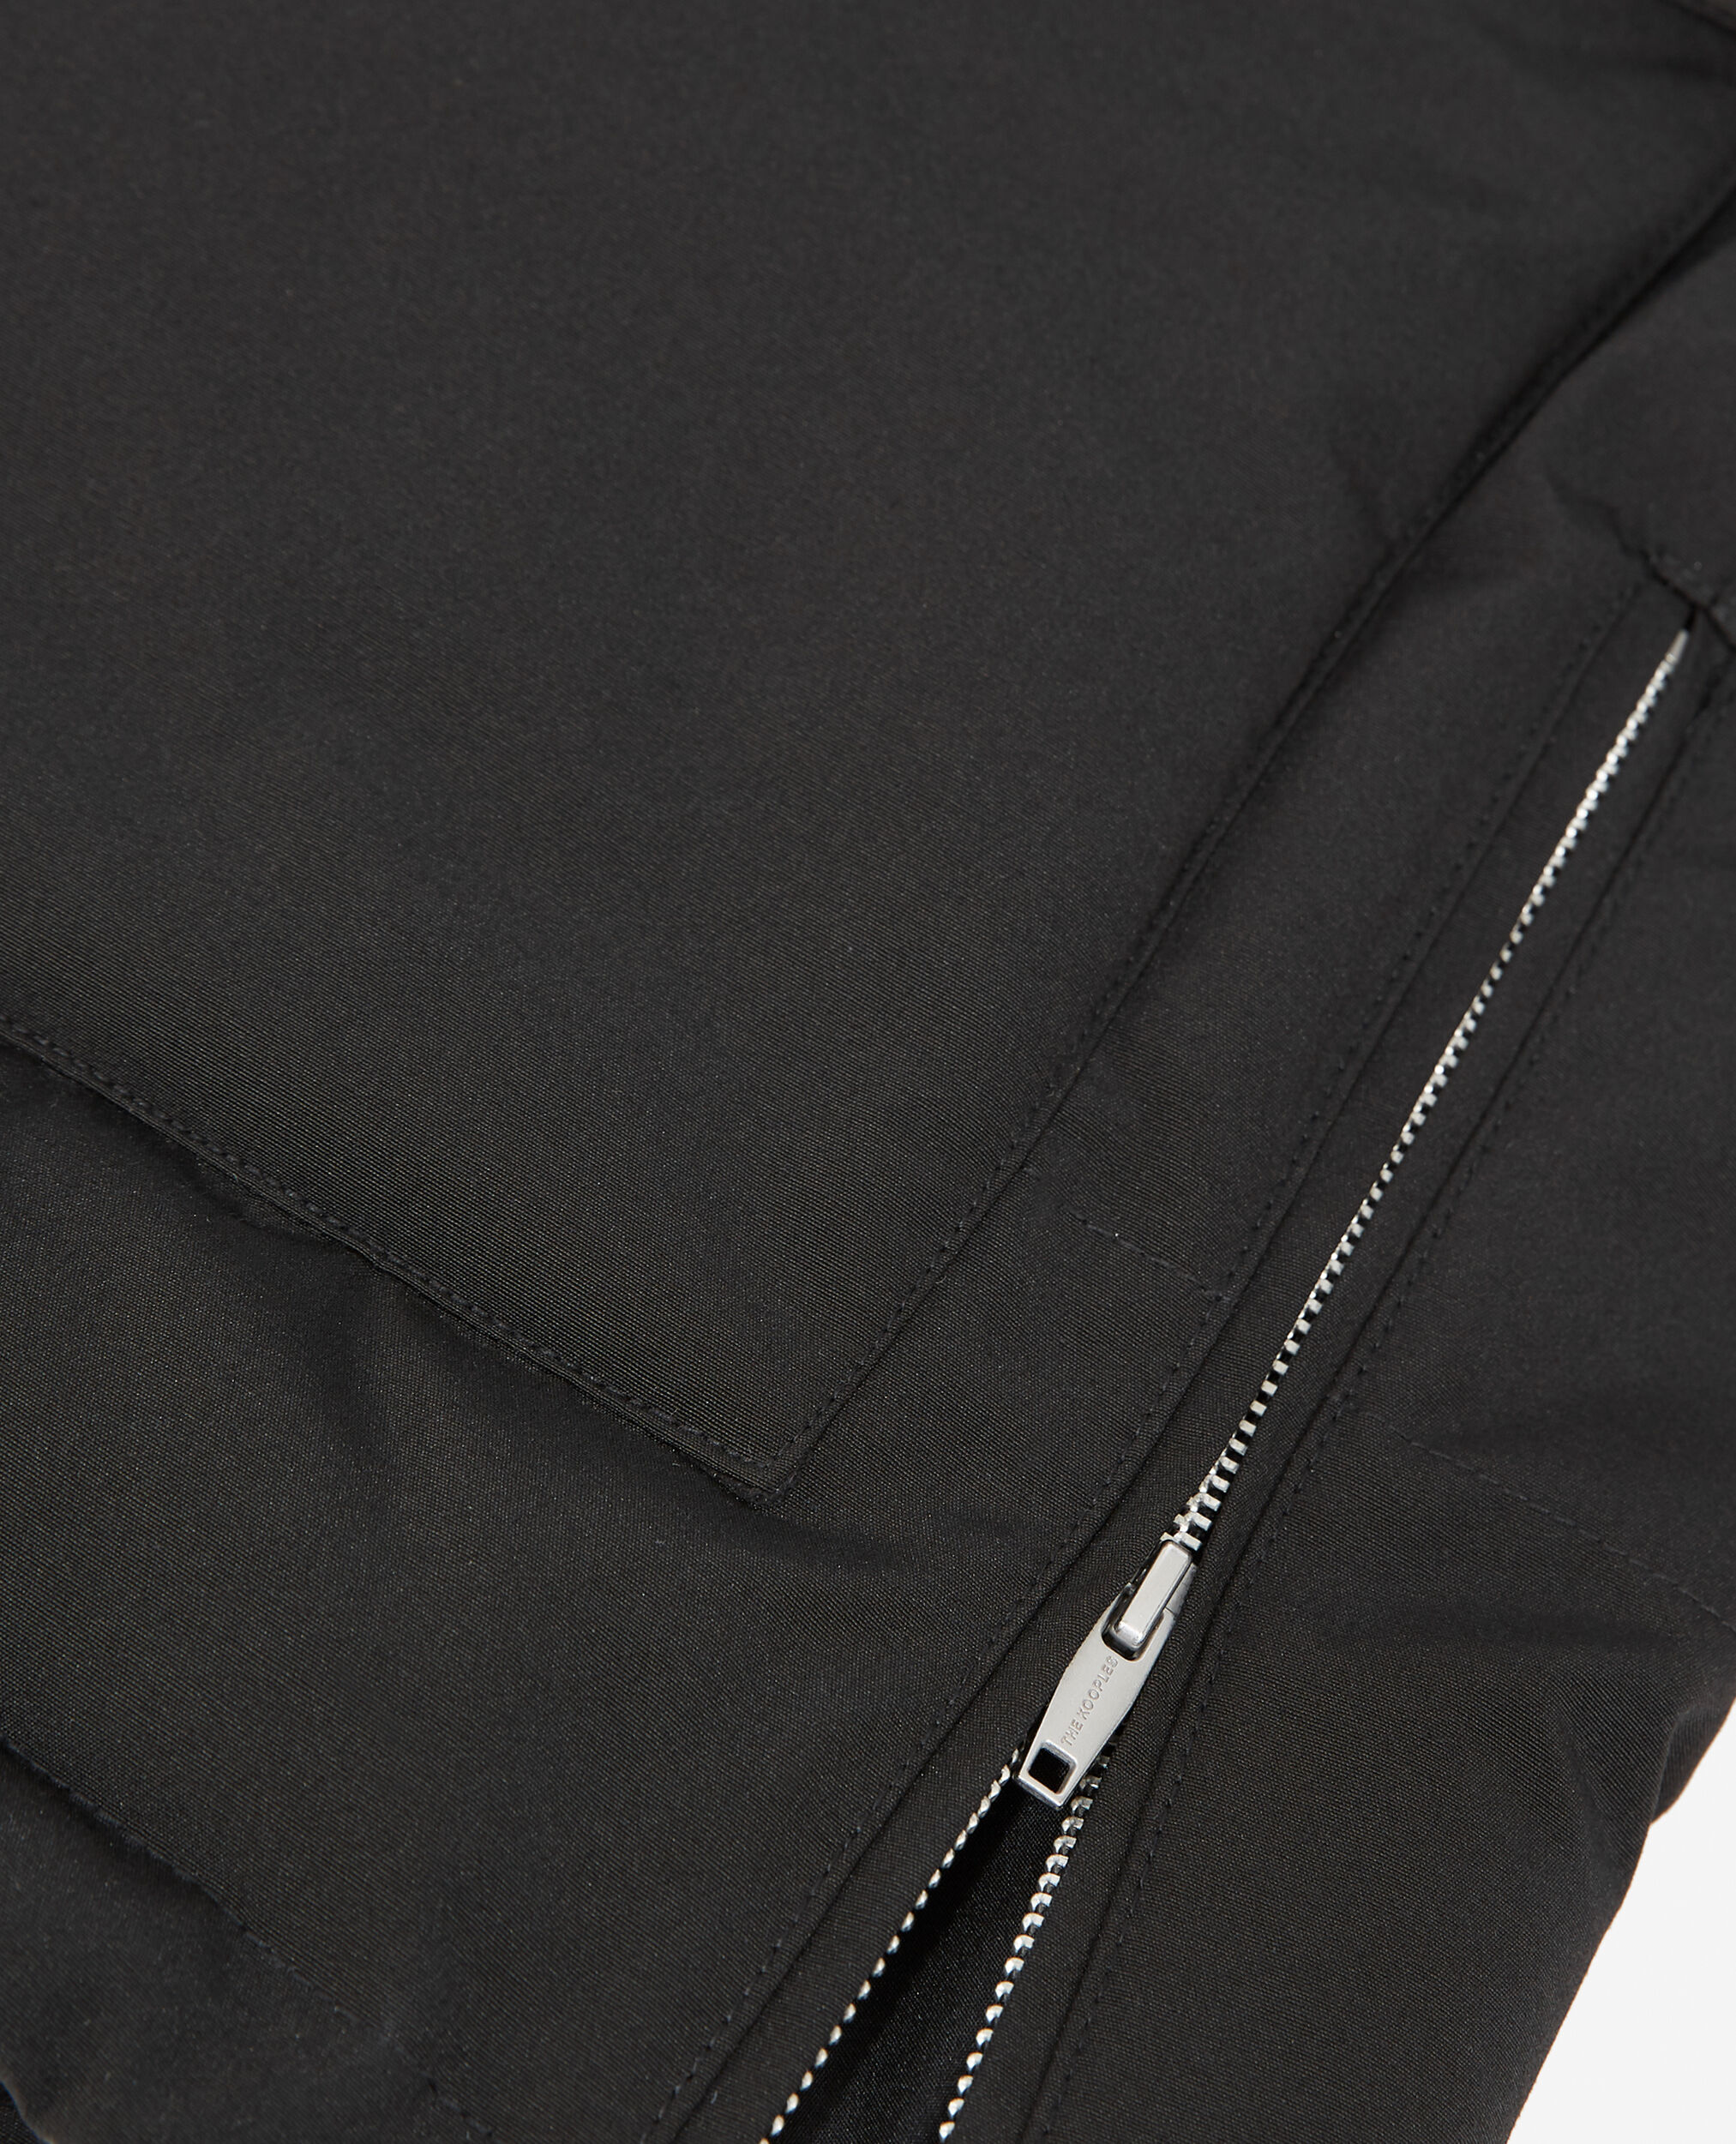 Parka longue nylon noir capuche amovible, BLACK, hi-res image number null